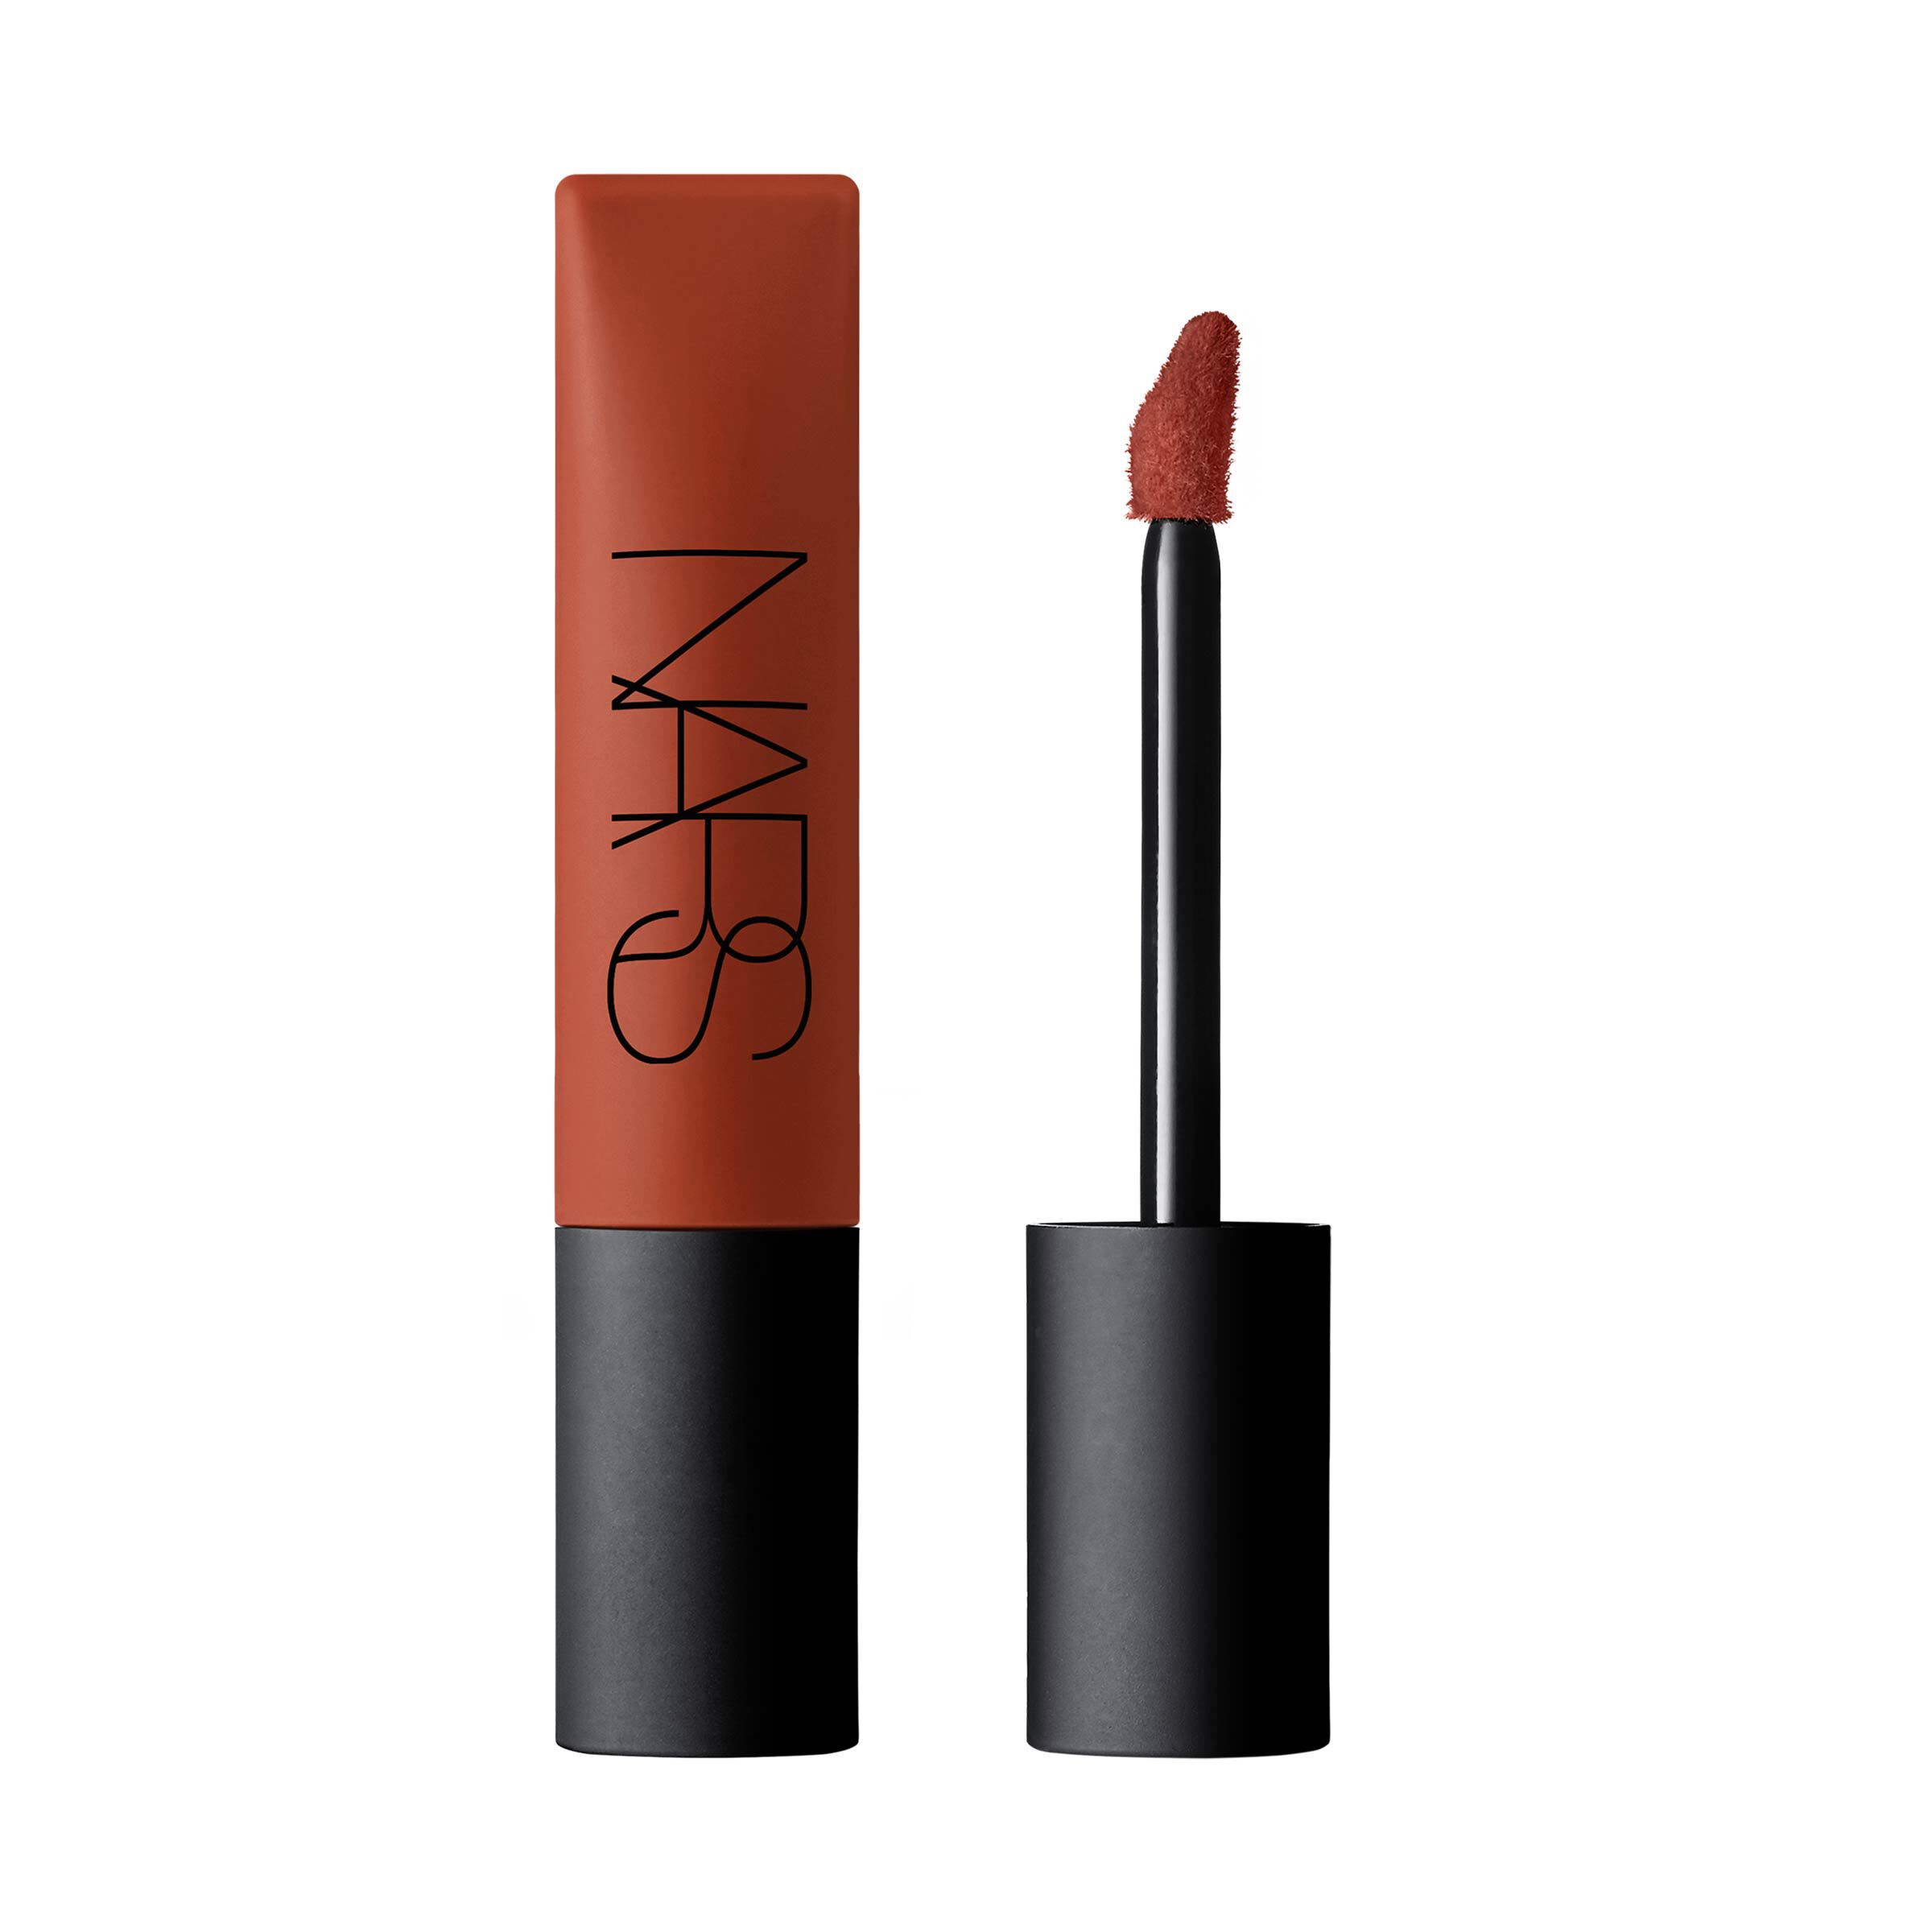 NARS Lip Makeup - Lipstick, Lip Gloss, Lip Pencils, Lip Brushes